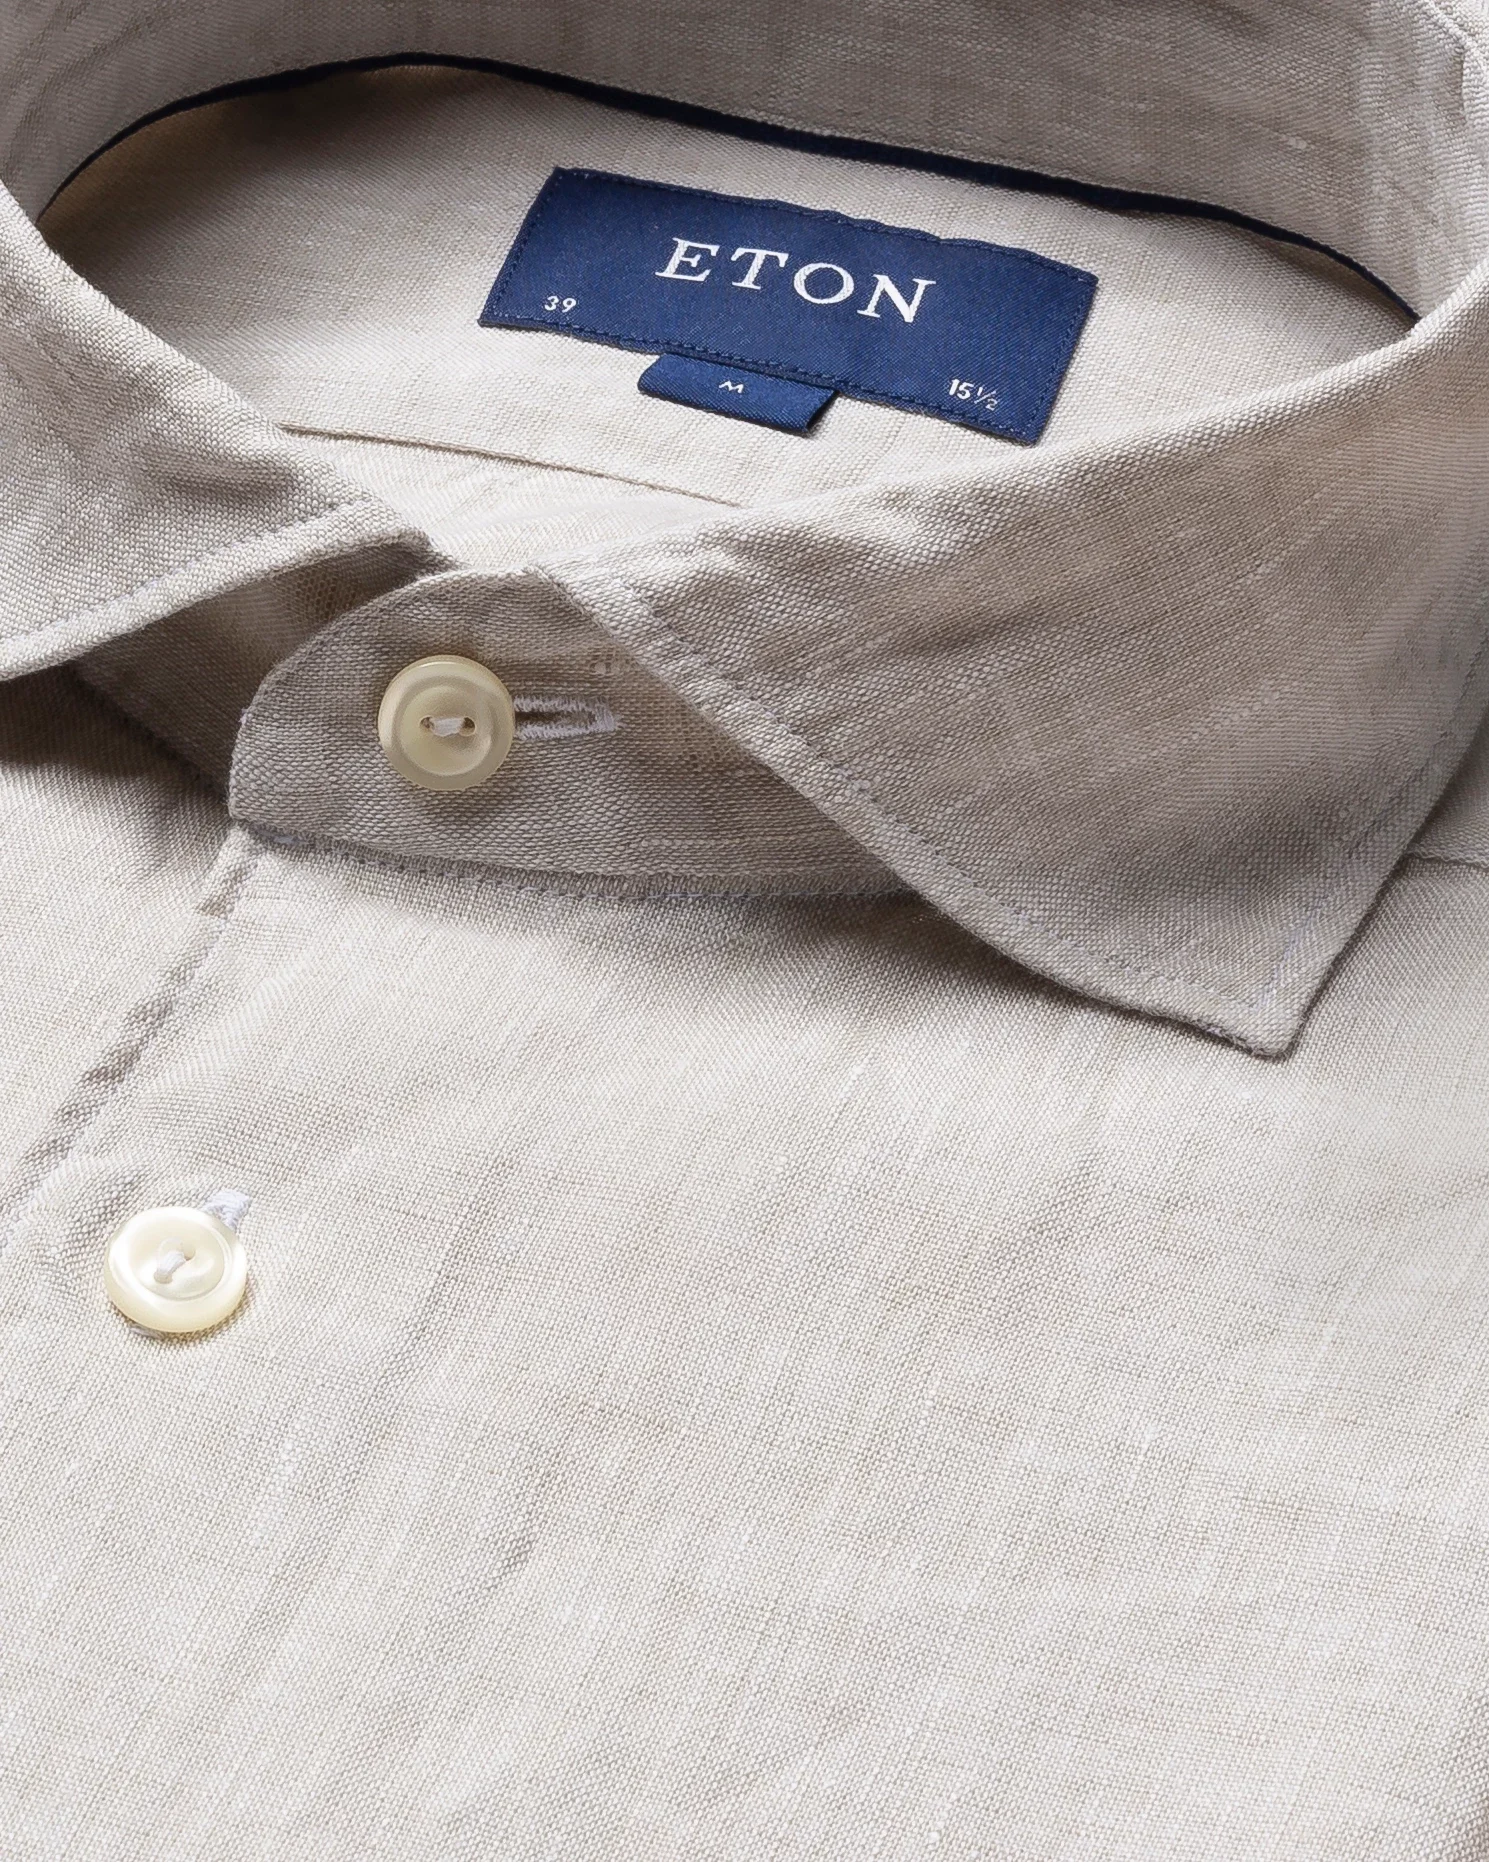 Eton - gray linen shirt